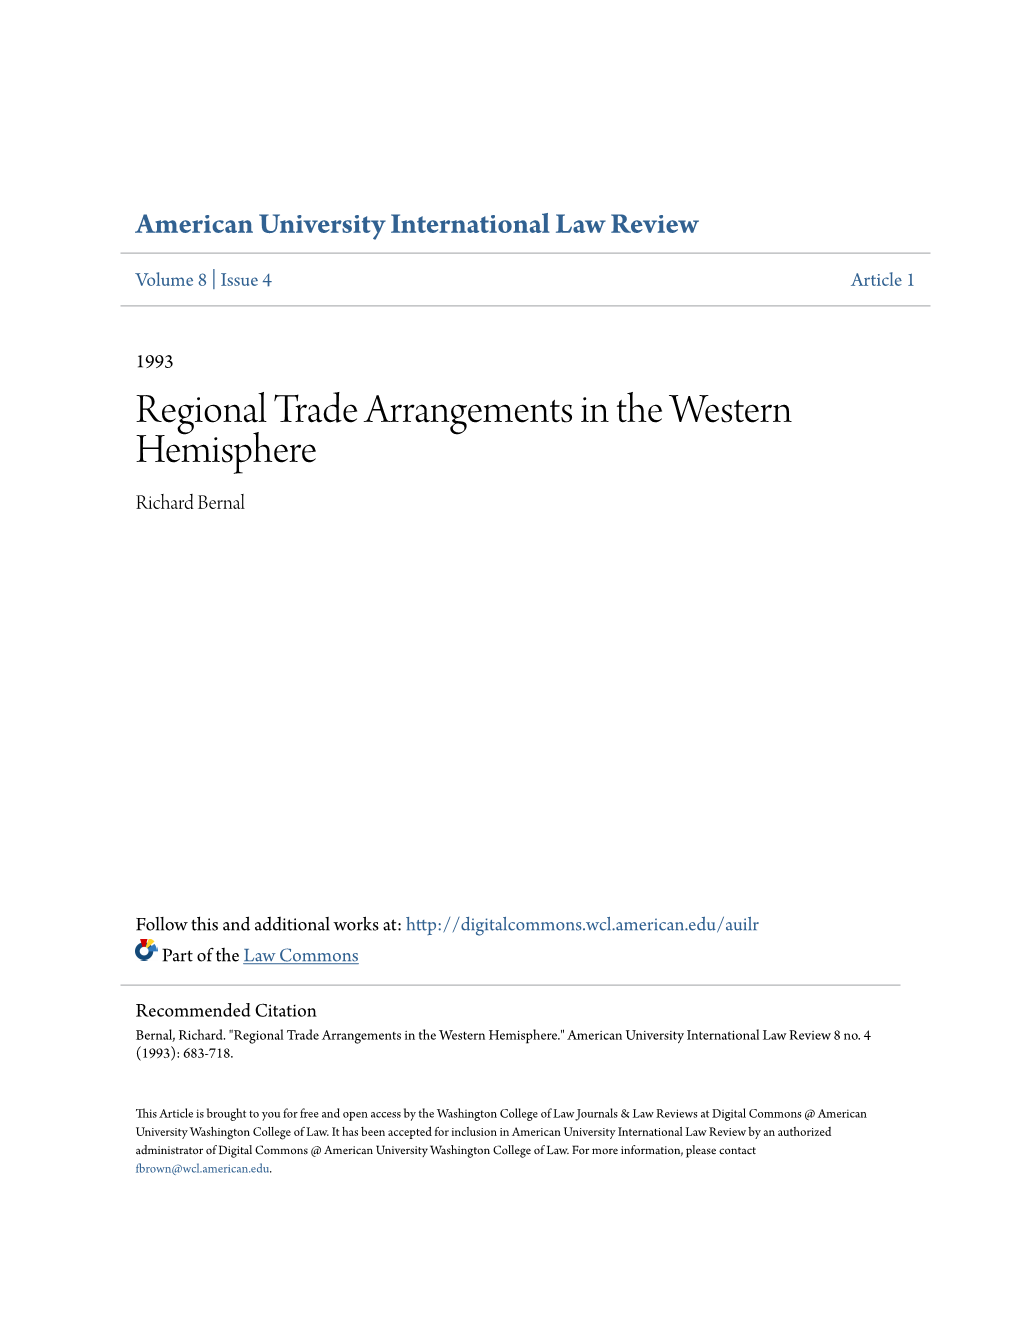 Regional Trade Arrangements in the Western Hemisphere Richard Bernal